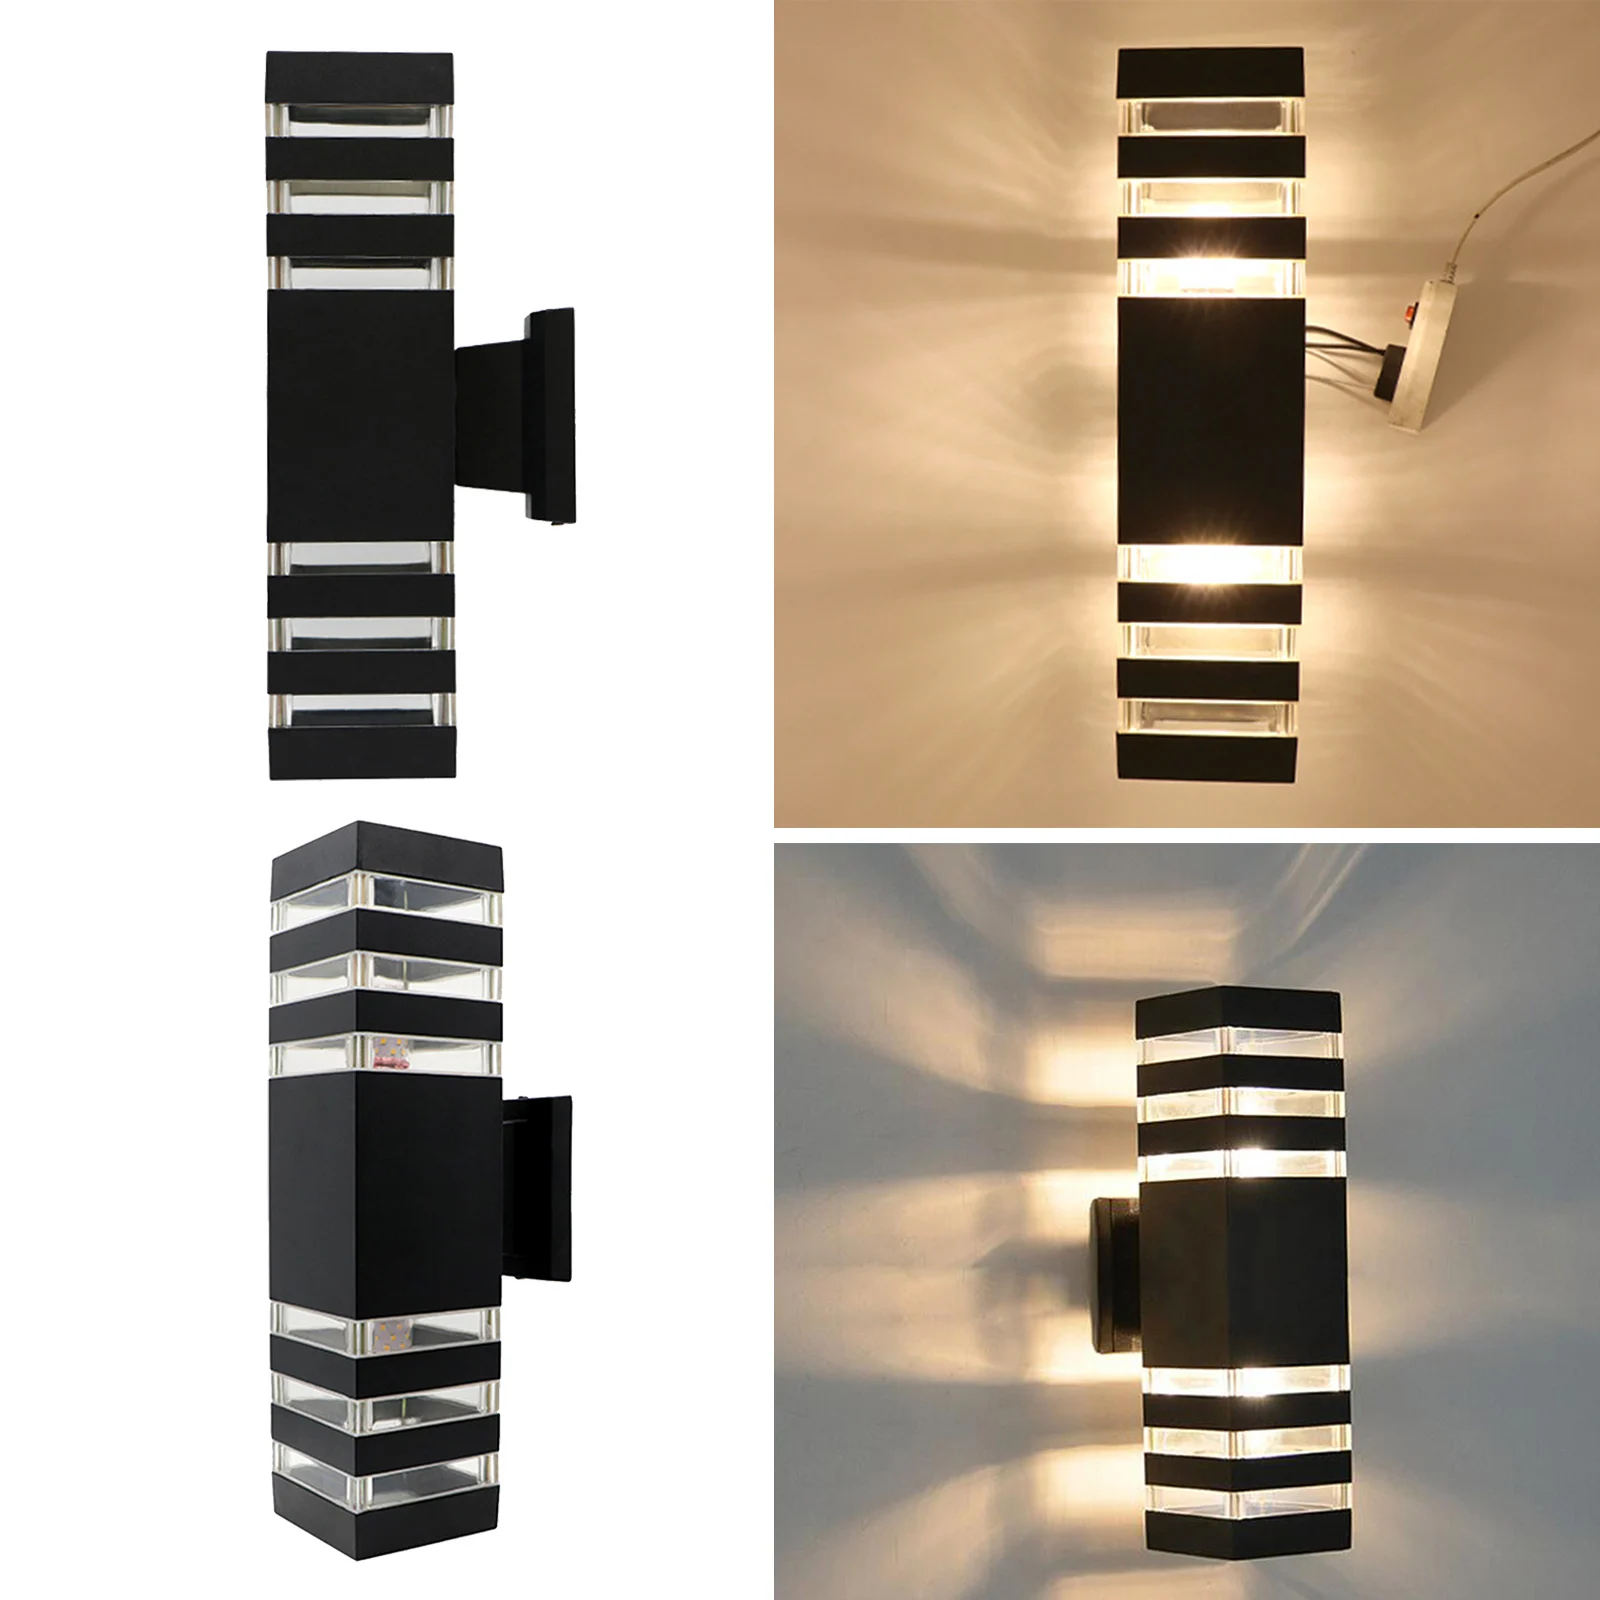 Modern Up/Down Wall Sconce E27 Socket Double Head Exterior Wall Light Fixtures Corridor Lights IP65 Waterproof